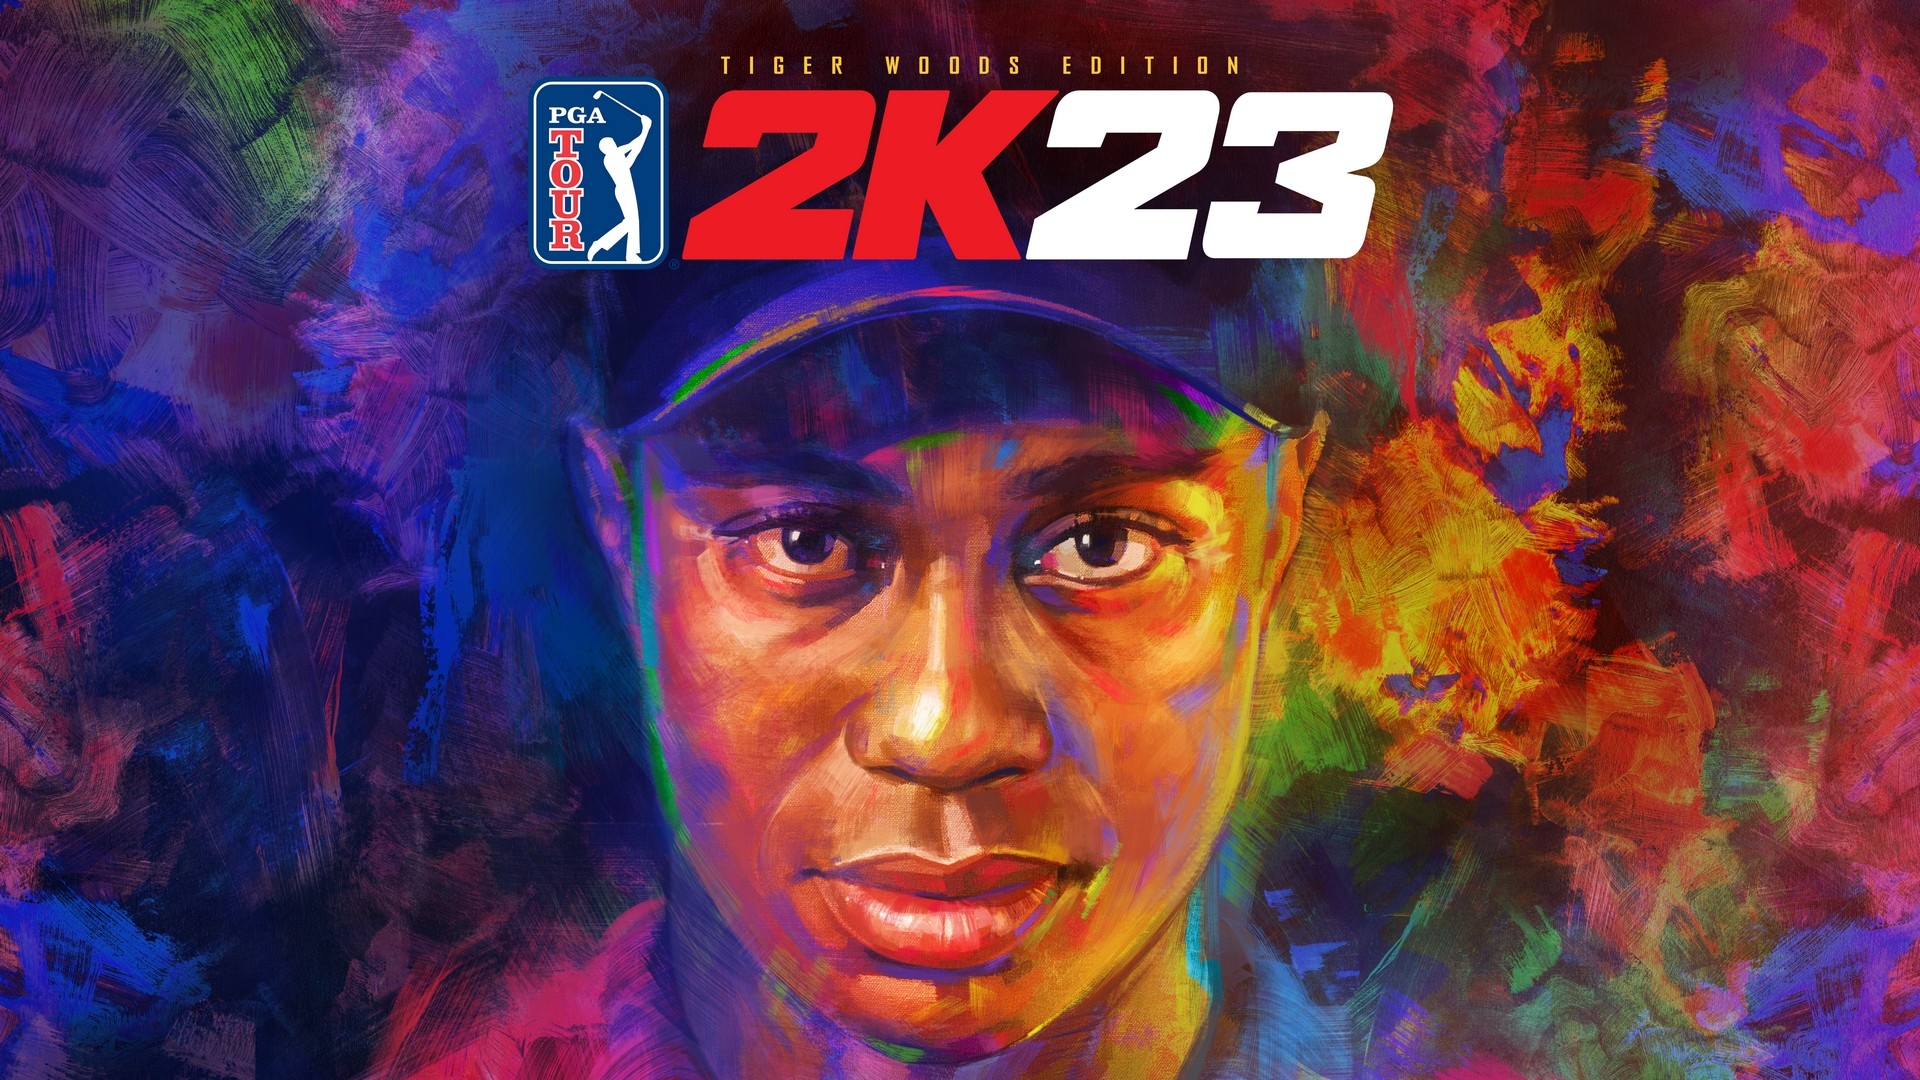 Reviews PGA Tour Edition ONE Series Xbox X|S) 2K23 Tiger Woods / (Xbox